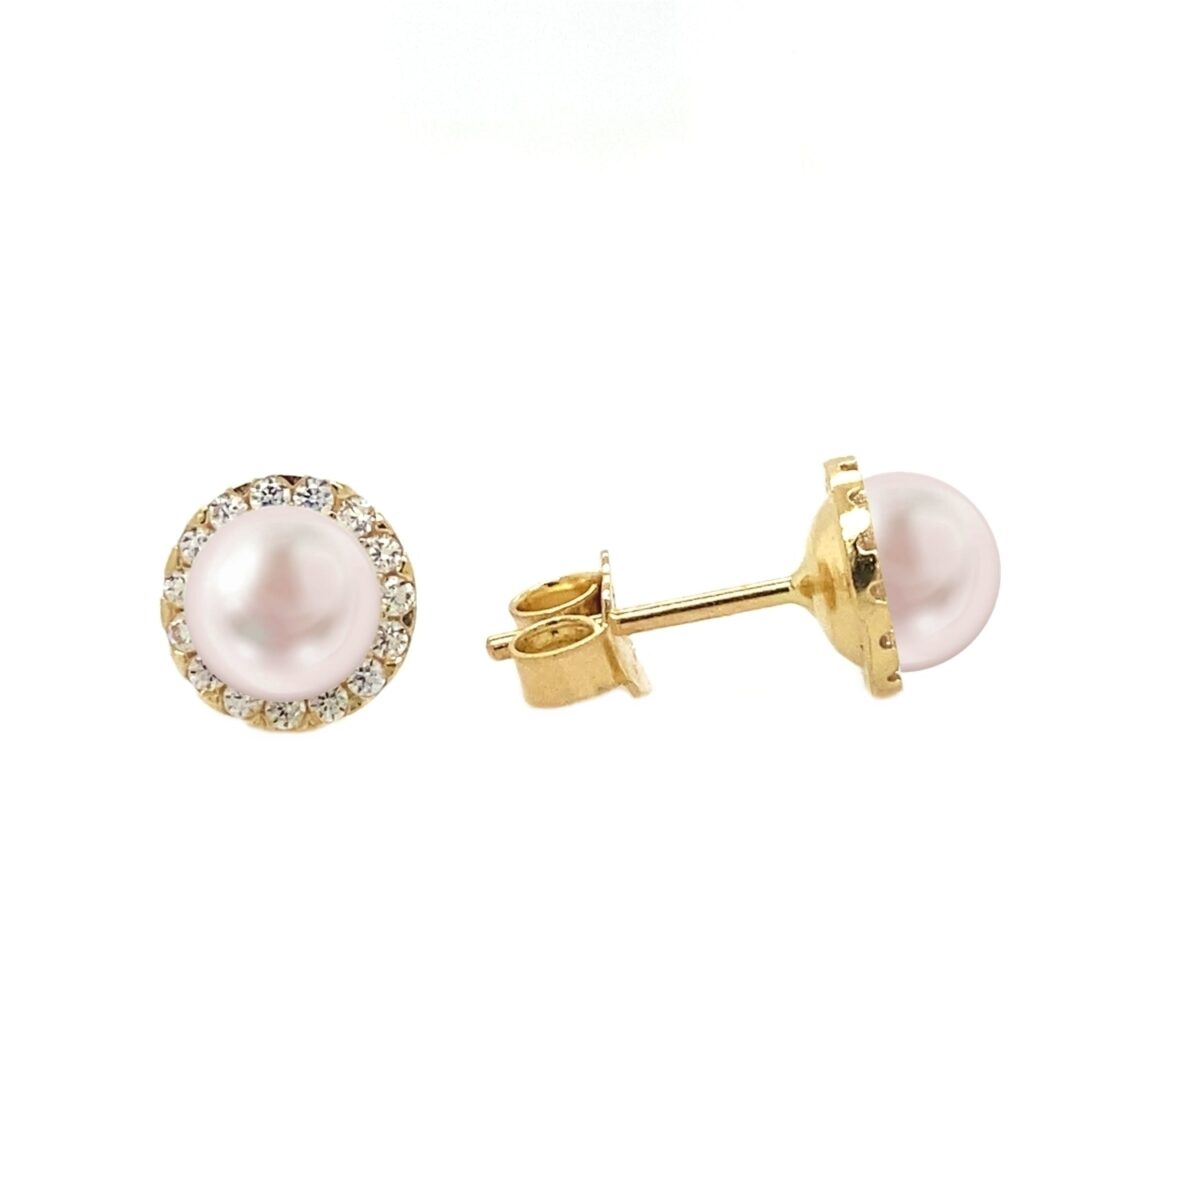 Jewellers - Σκουλαρίκια Ροζέτα με Μαργαριτάρι